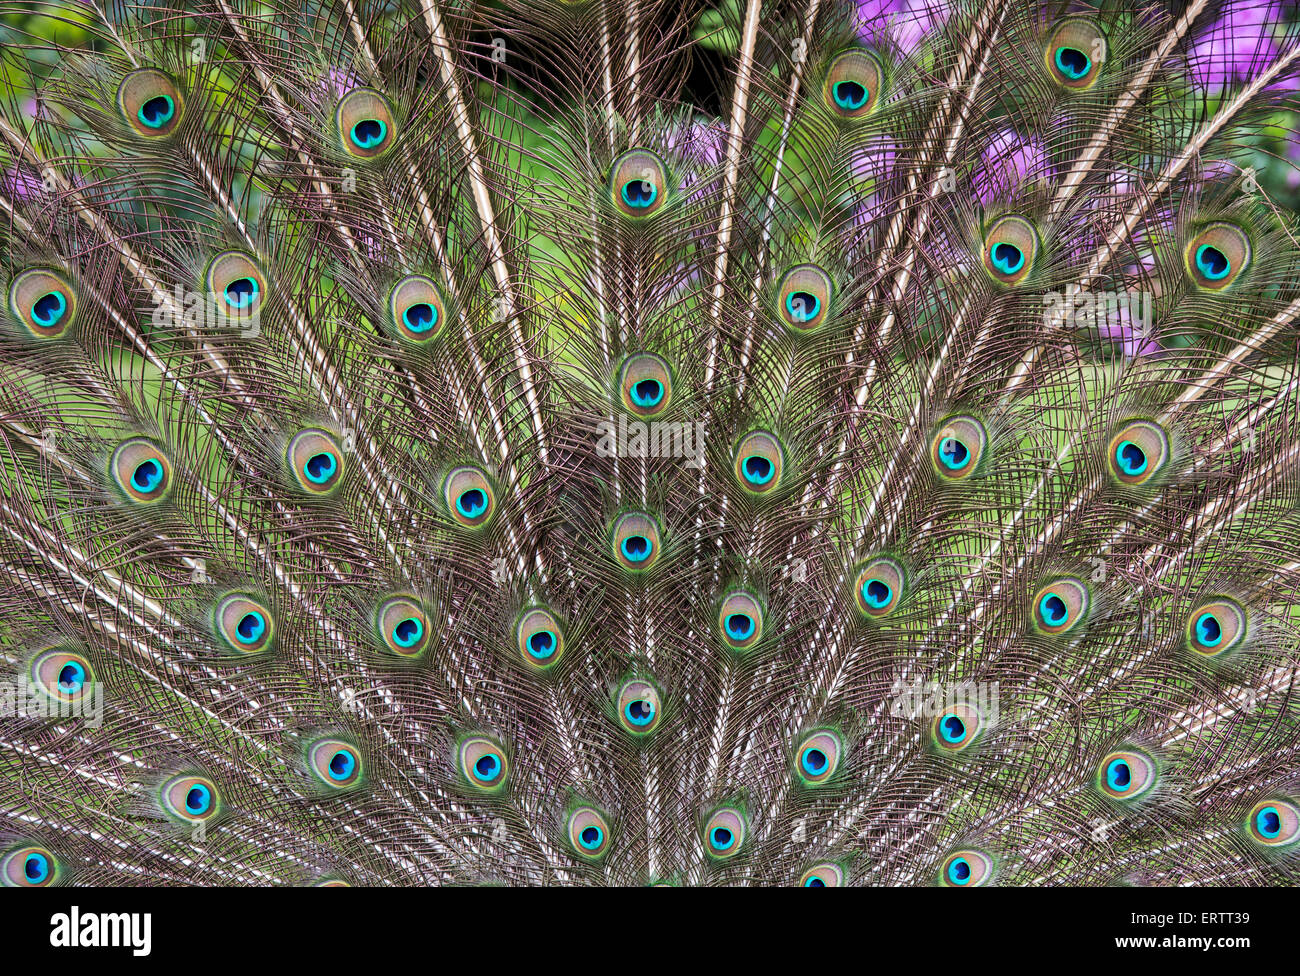 Pavo cristatus. Peacock Displaying feathers Stock Photo